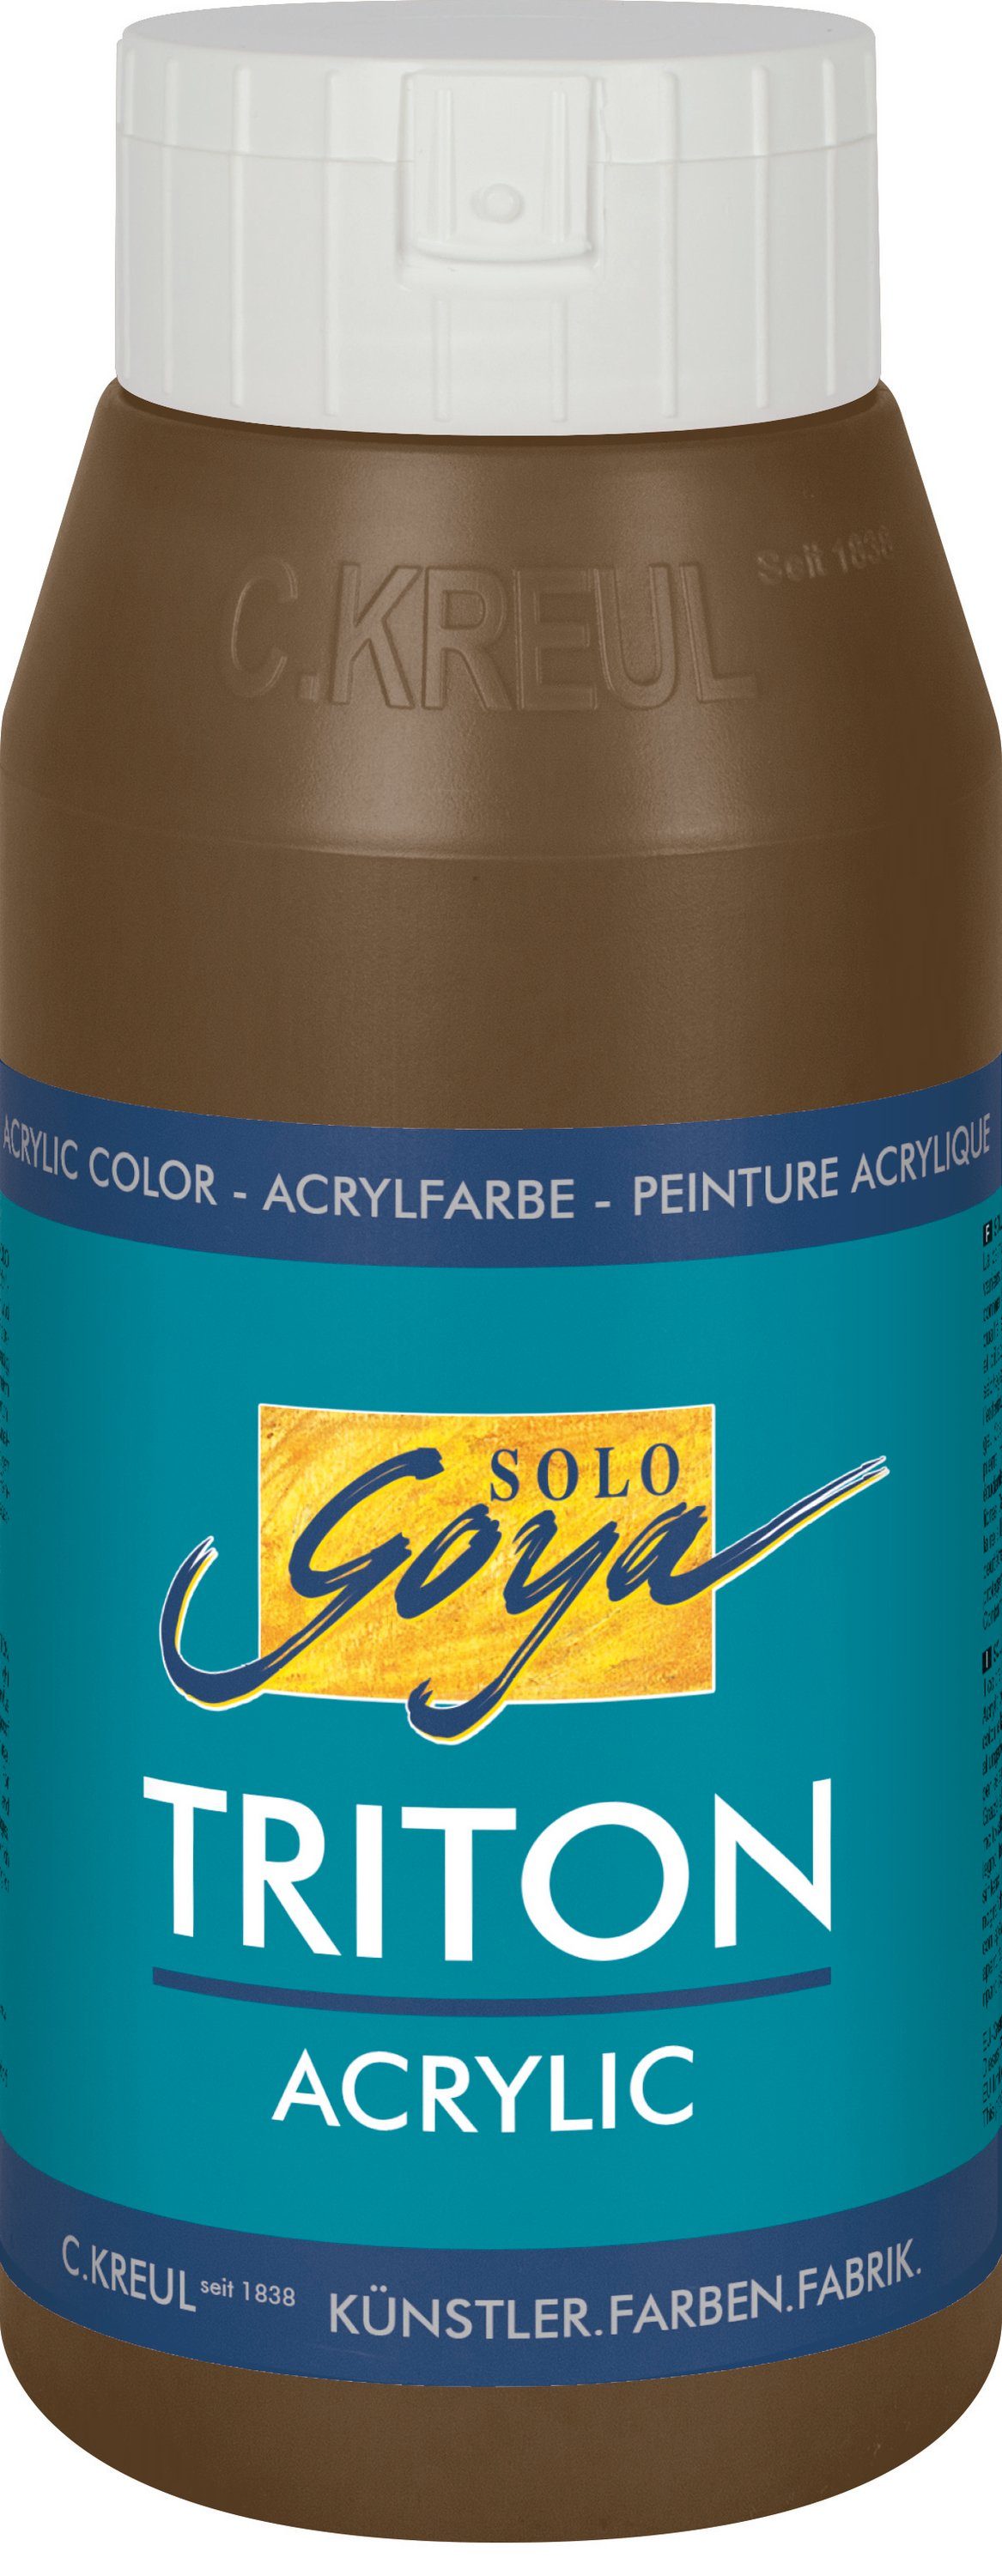 Kreul Acrylfarbe Solo Goya Triton 750 ml Havannabraun Acrylic